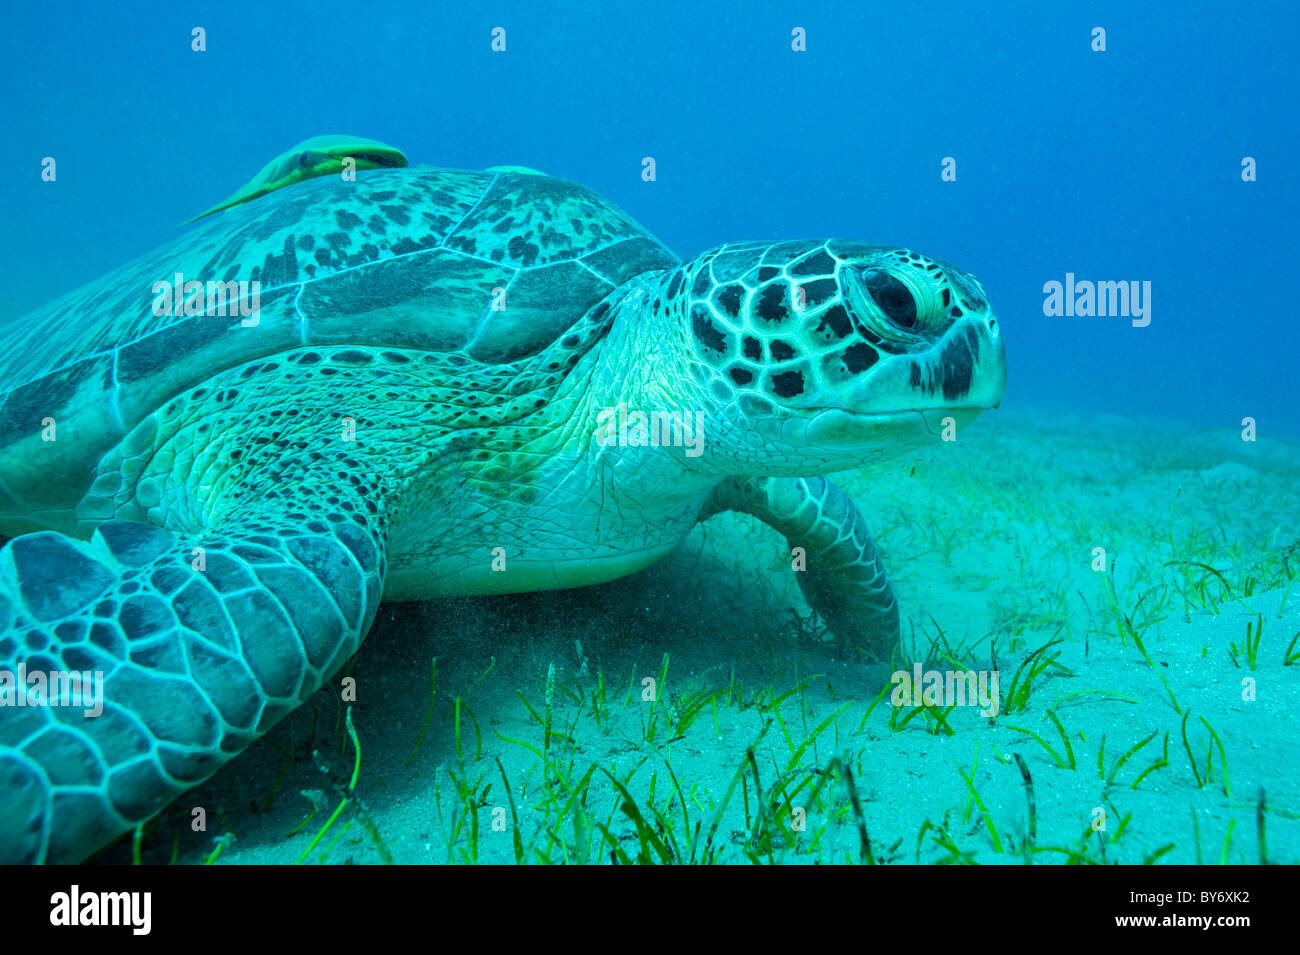 Green Turtle, Chelonia mydas, Green Sea Turtle, Suppenschildkröte, Abu Dabab, Egypt, remora attached Stock Photo